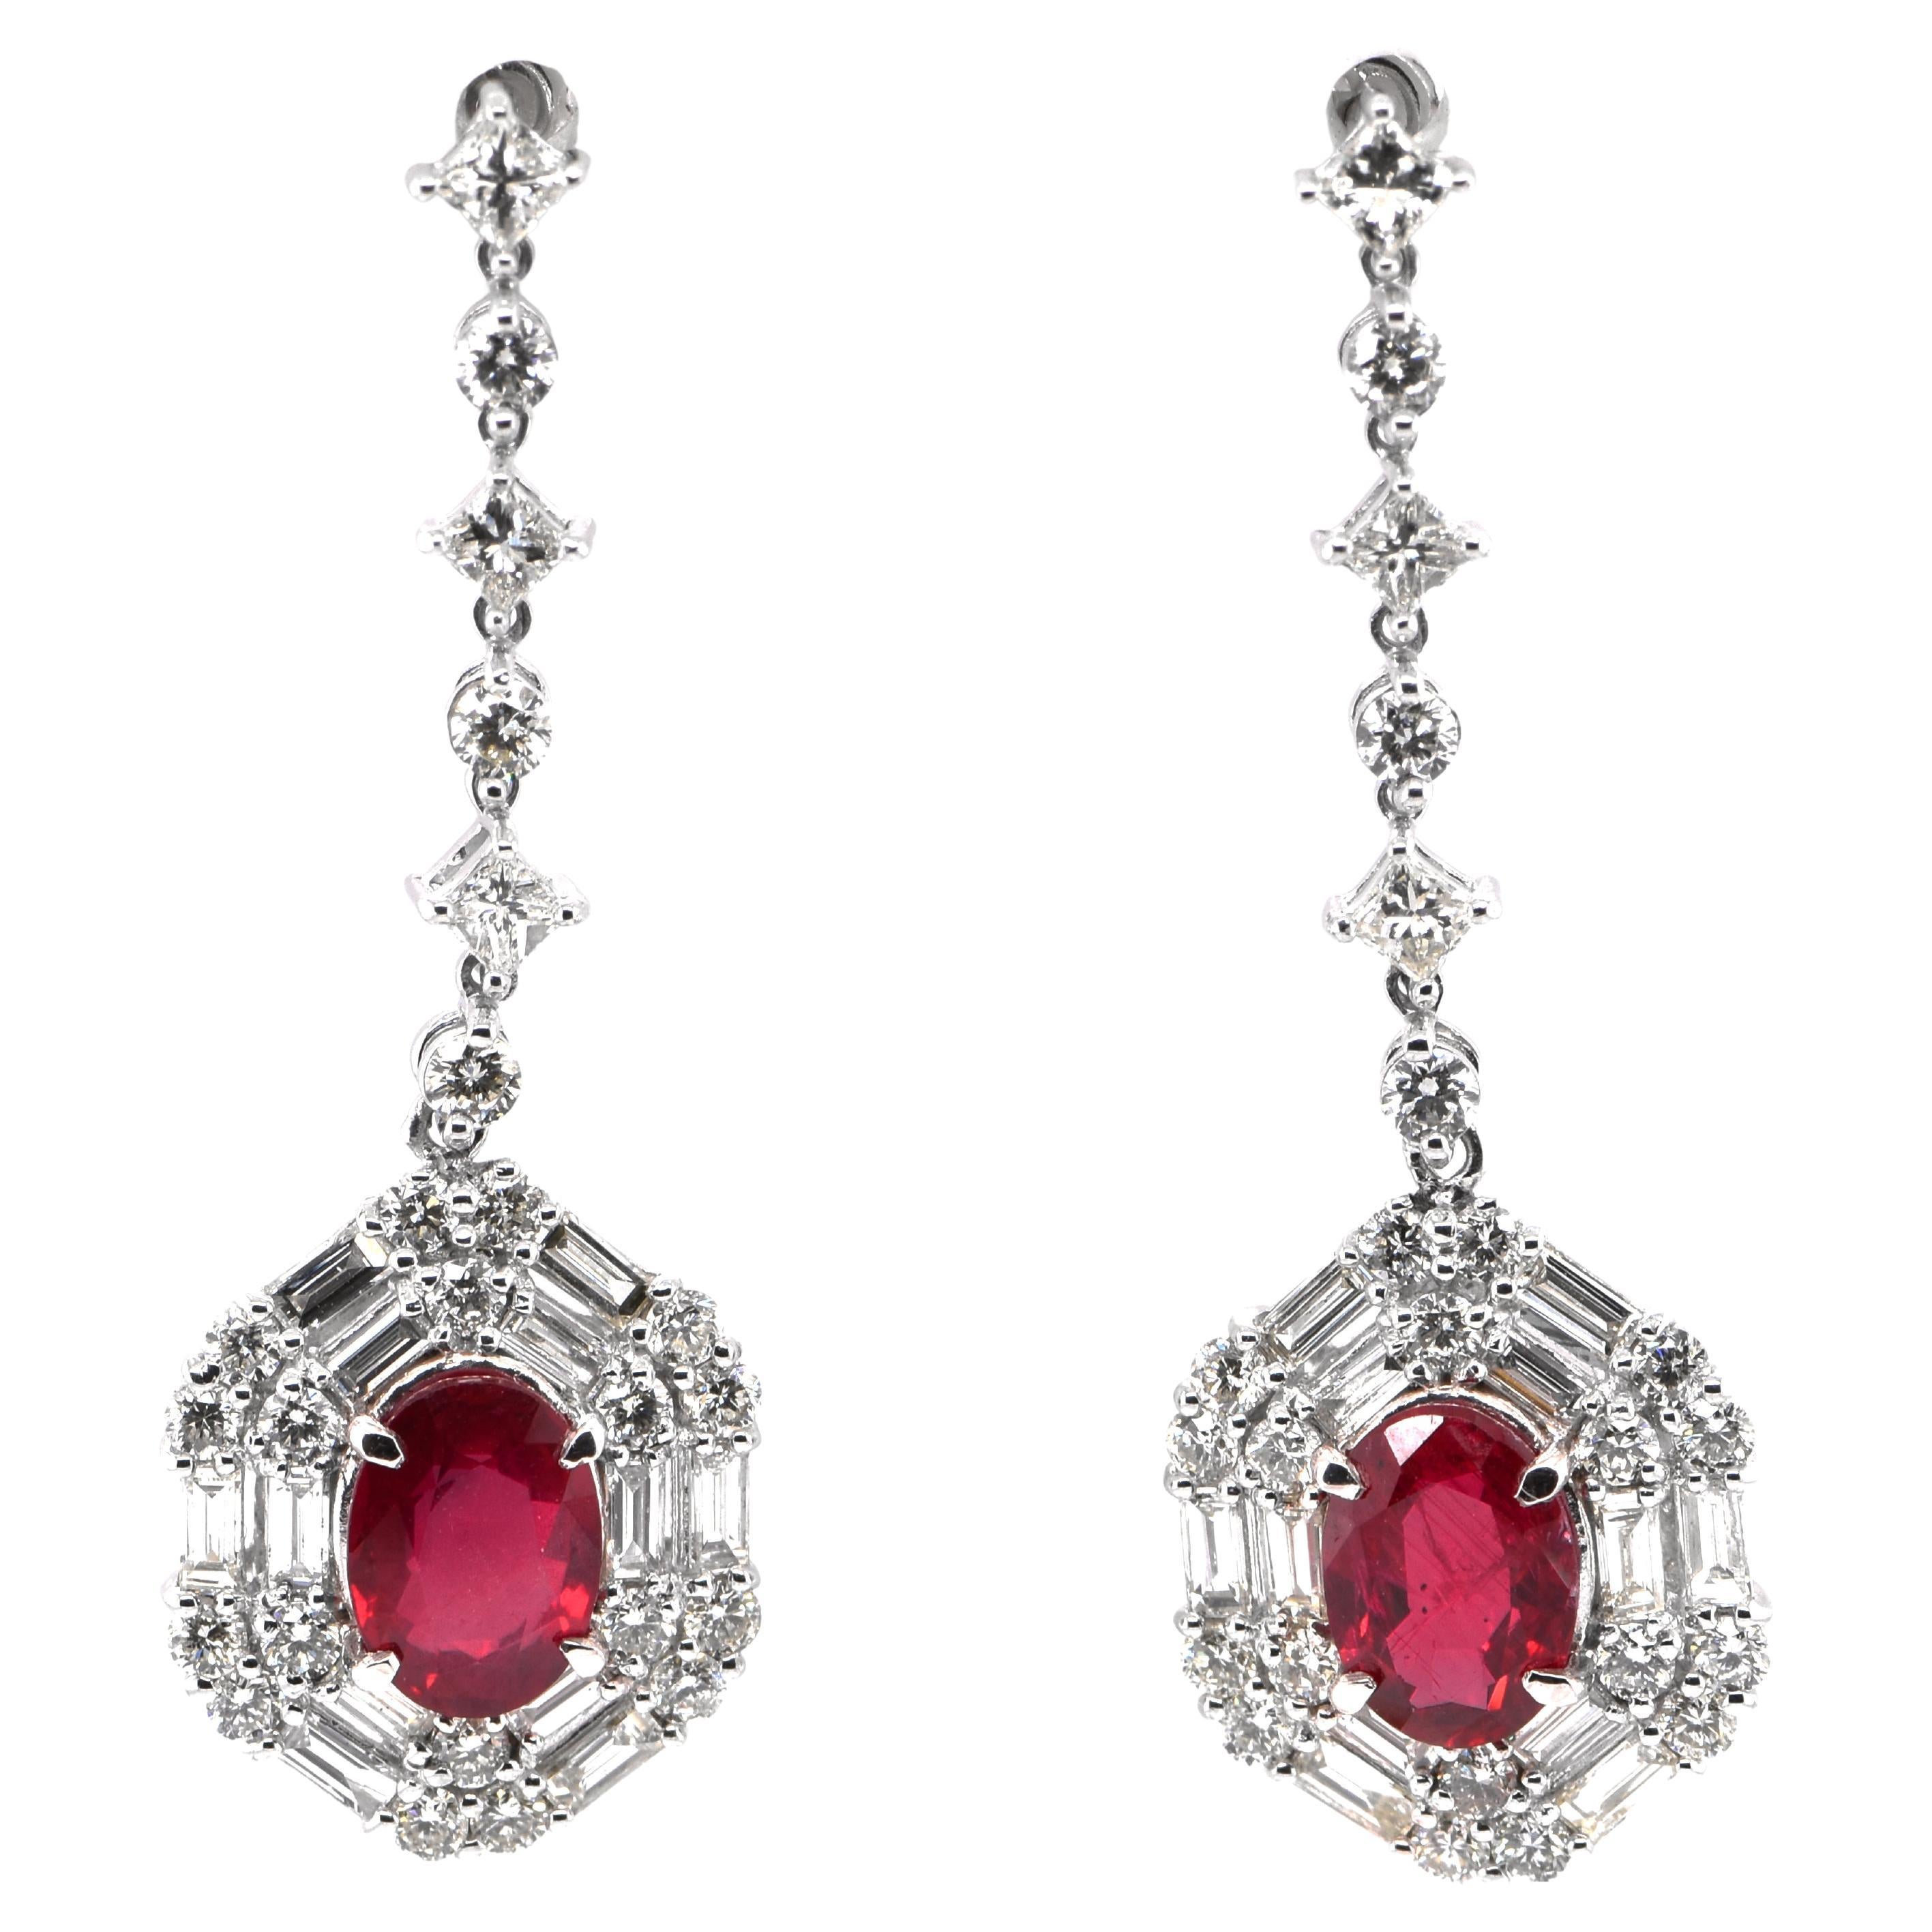 GIA Certified 2.19 Carat Natural Untreated Ruby Drop Earrings Set in Platinum